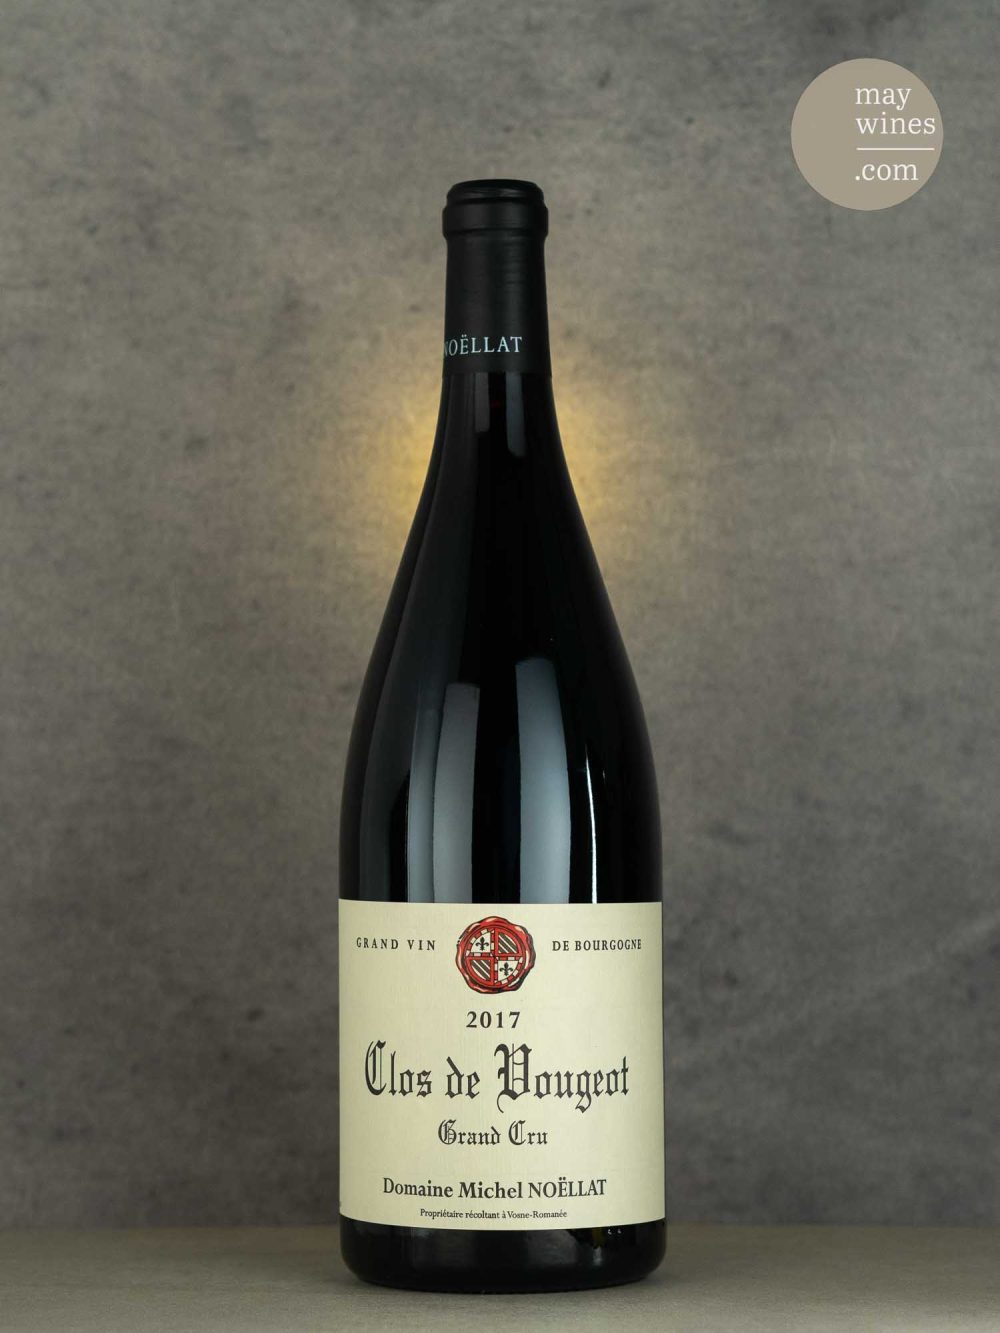 May Wines – Rotwein – 2017 Clos de Vougeot Grand Cru - Domaine Michel Noëllat